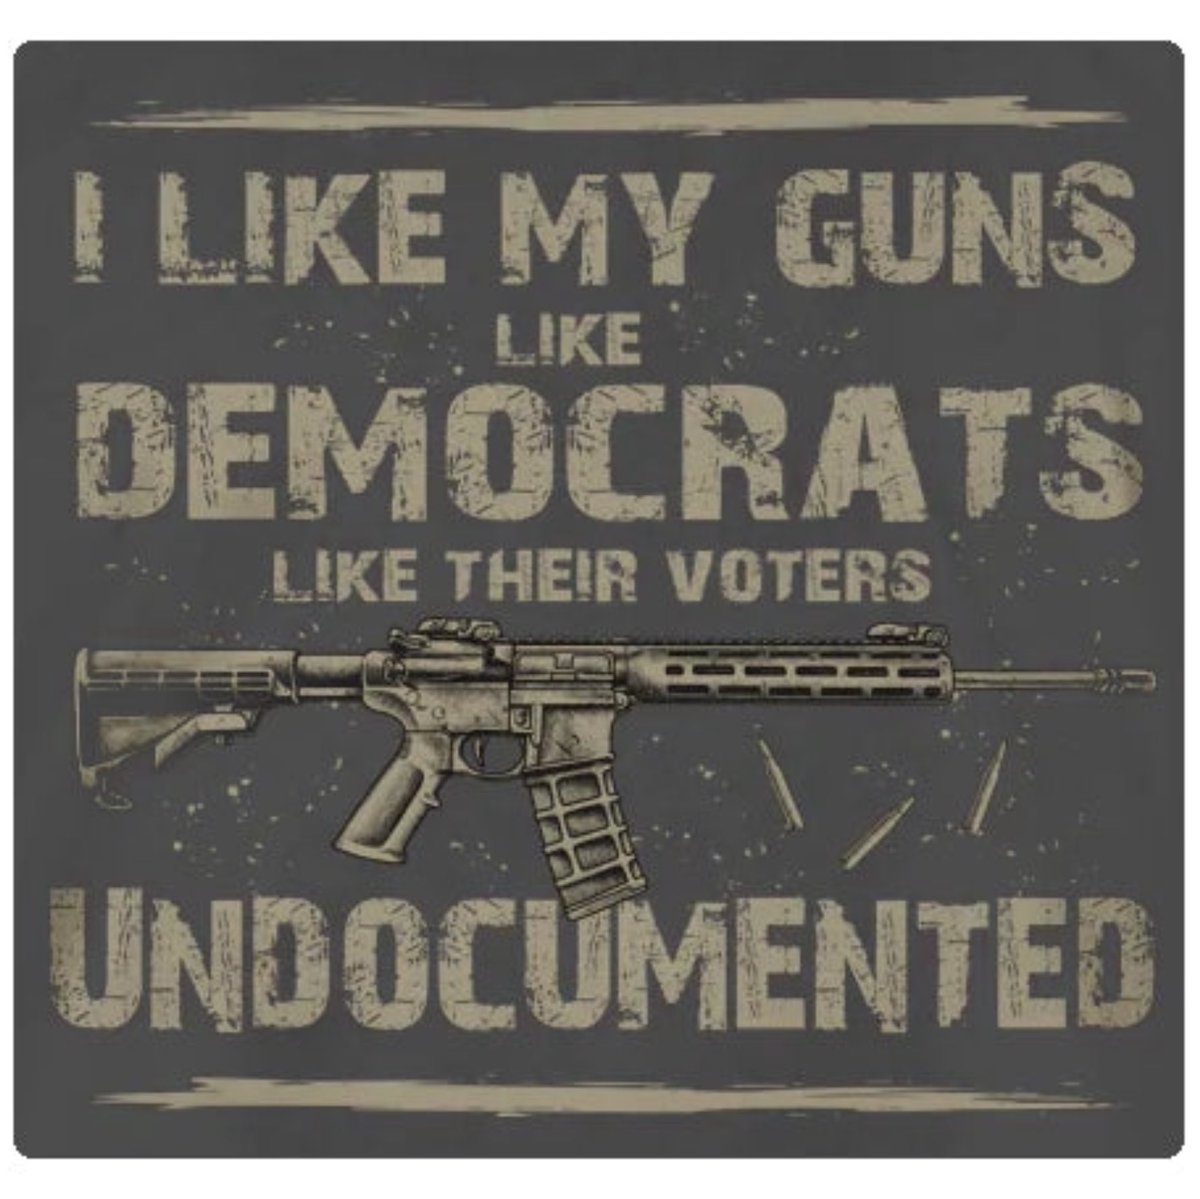 OUR guns still outnumber their illegals. A fact Democrats detest. 👊